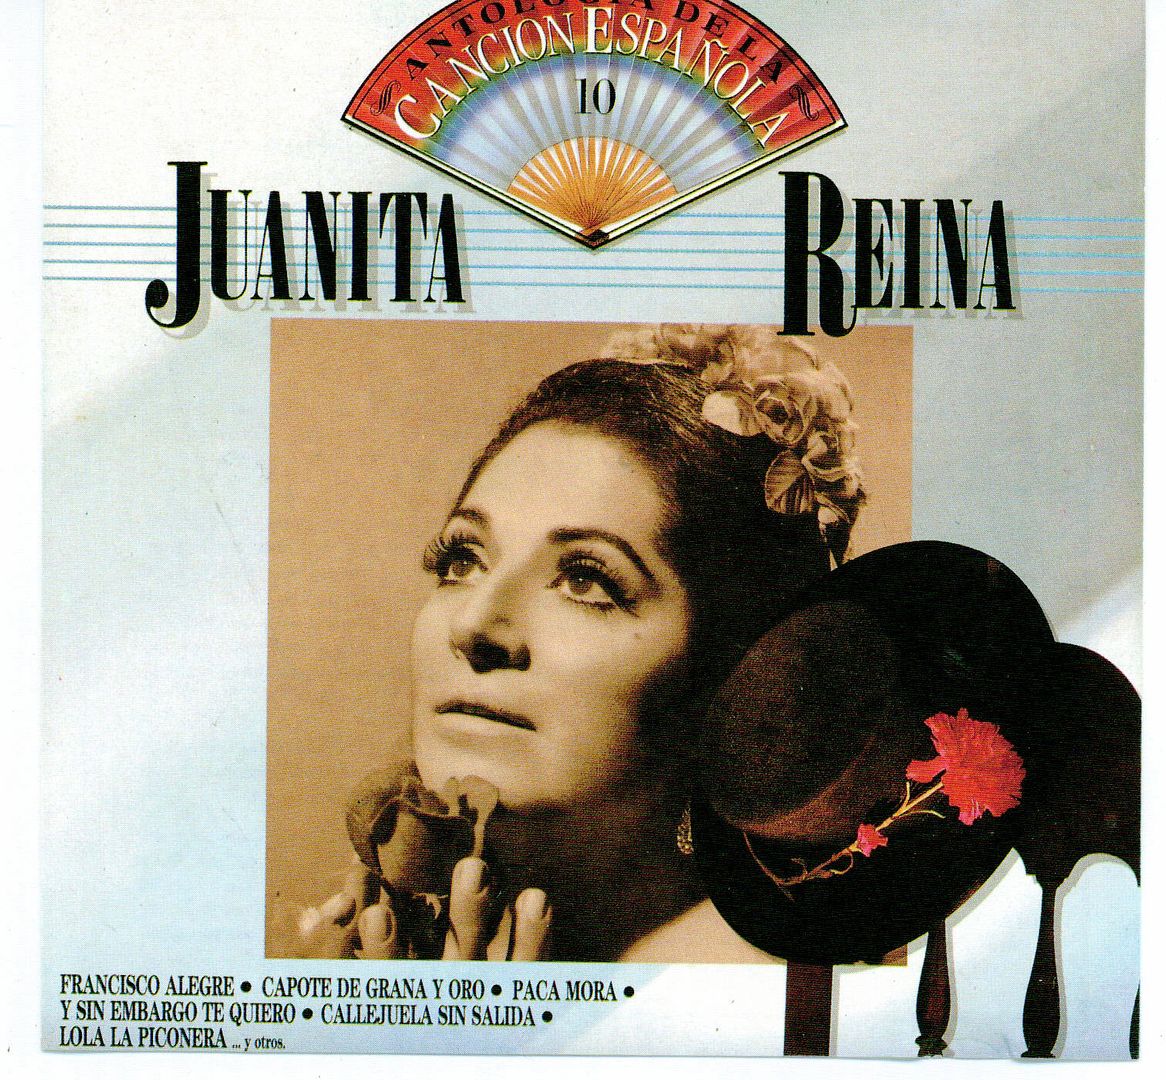 muy 62 - Juanita Reina - Antologia de la Cancion Española Vol.10